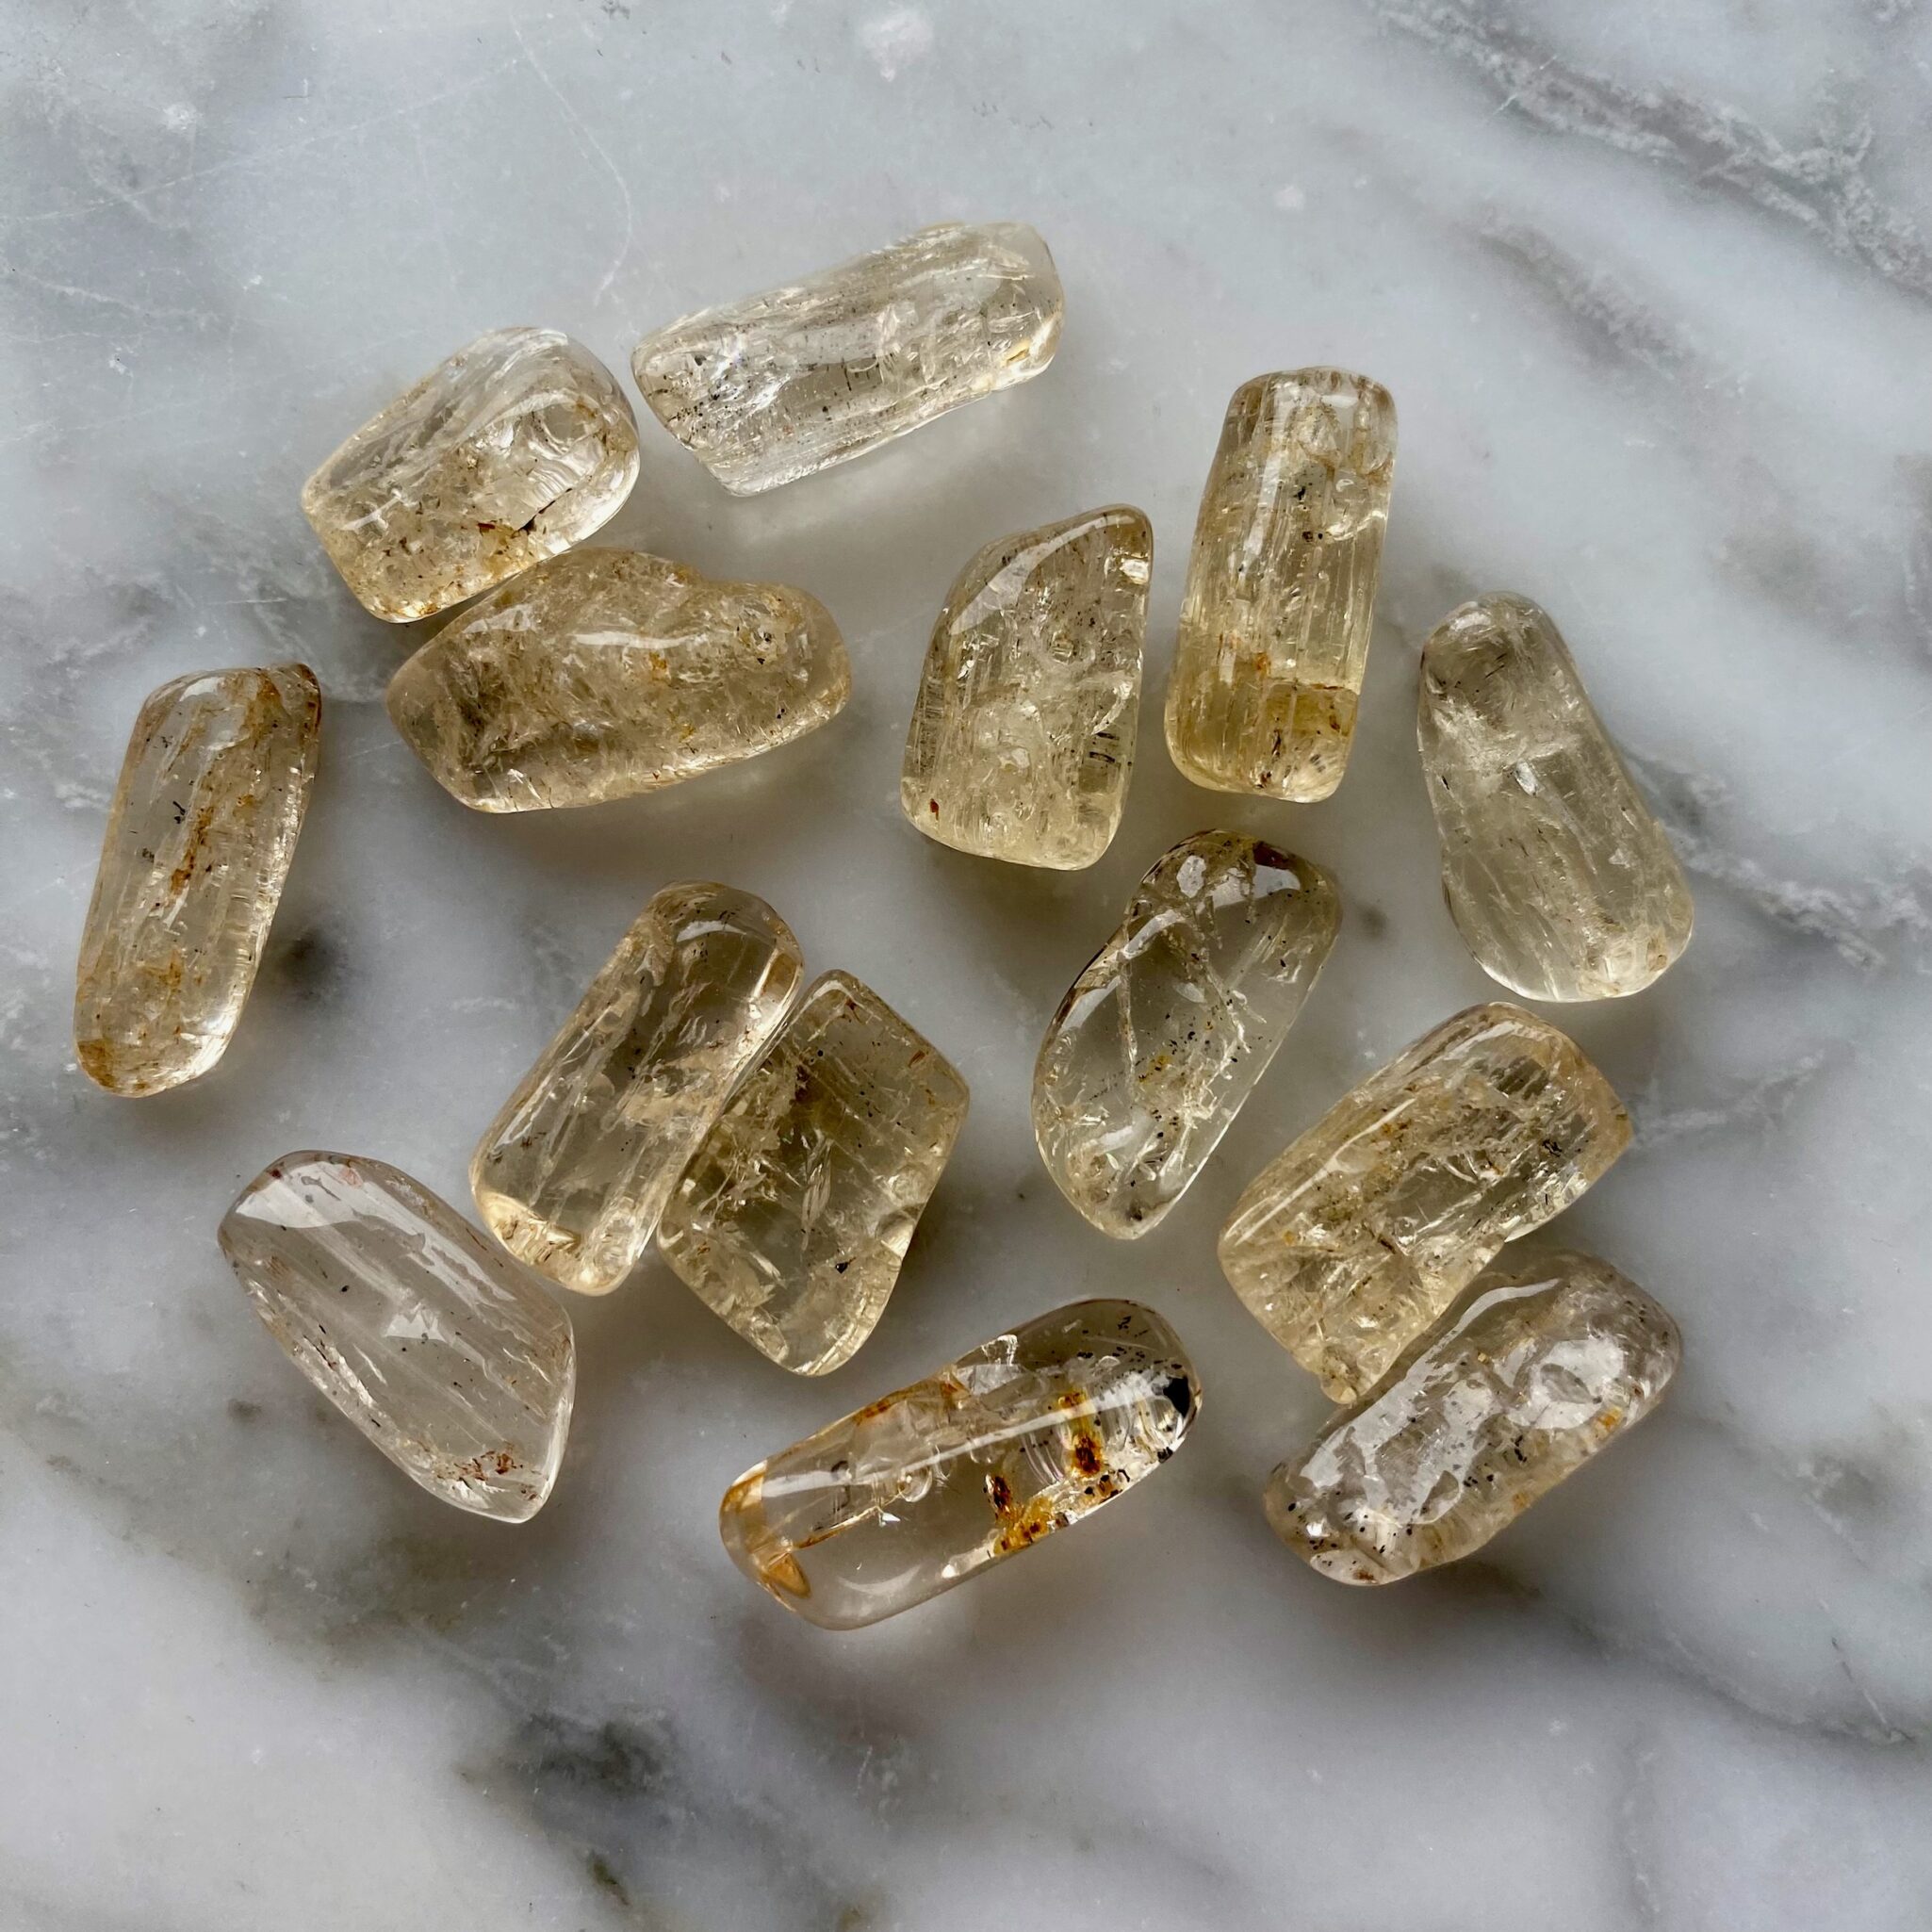 golden scapolite tumbled pocket stone - scapolite dorée roulée pierre de poche